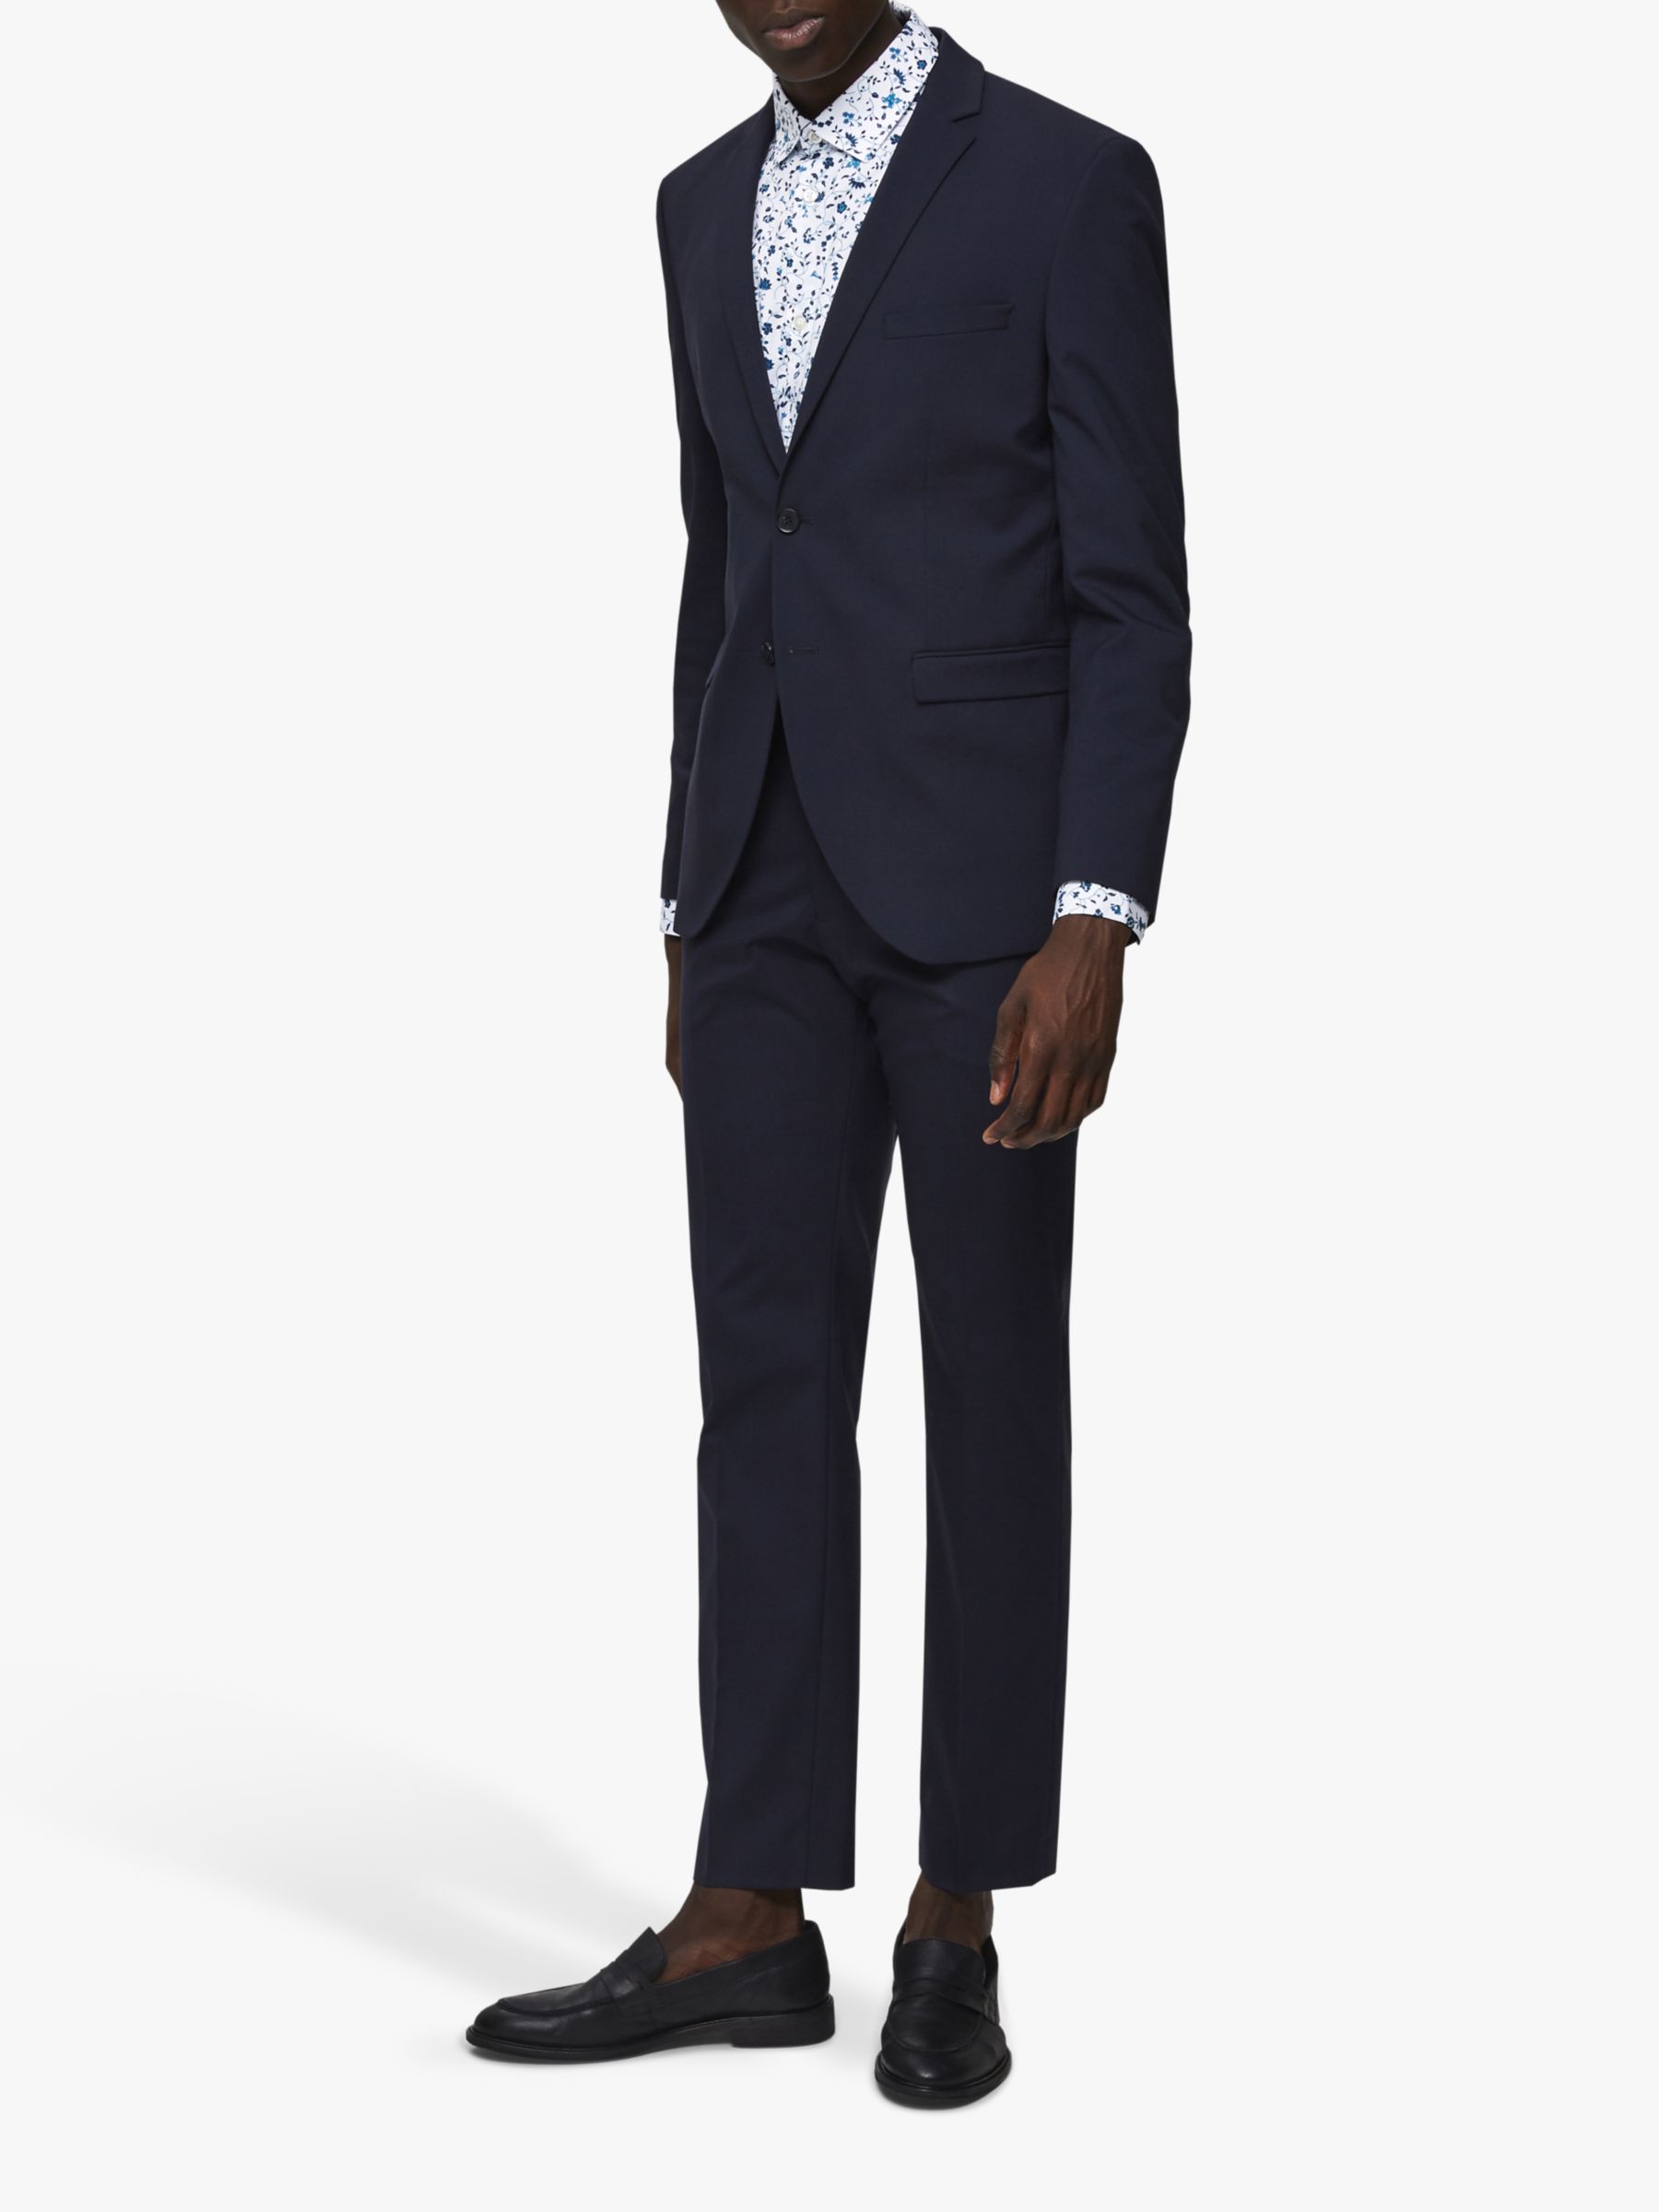 SELECTED HOMME Slim Fit Suit Jacket, Navy, 38R